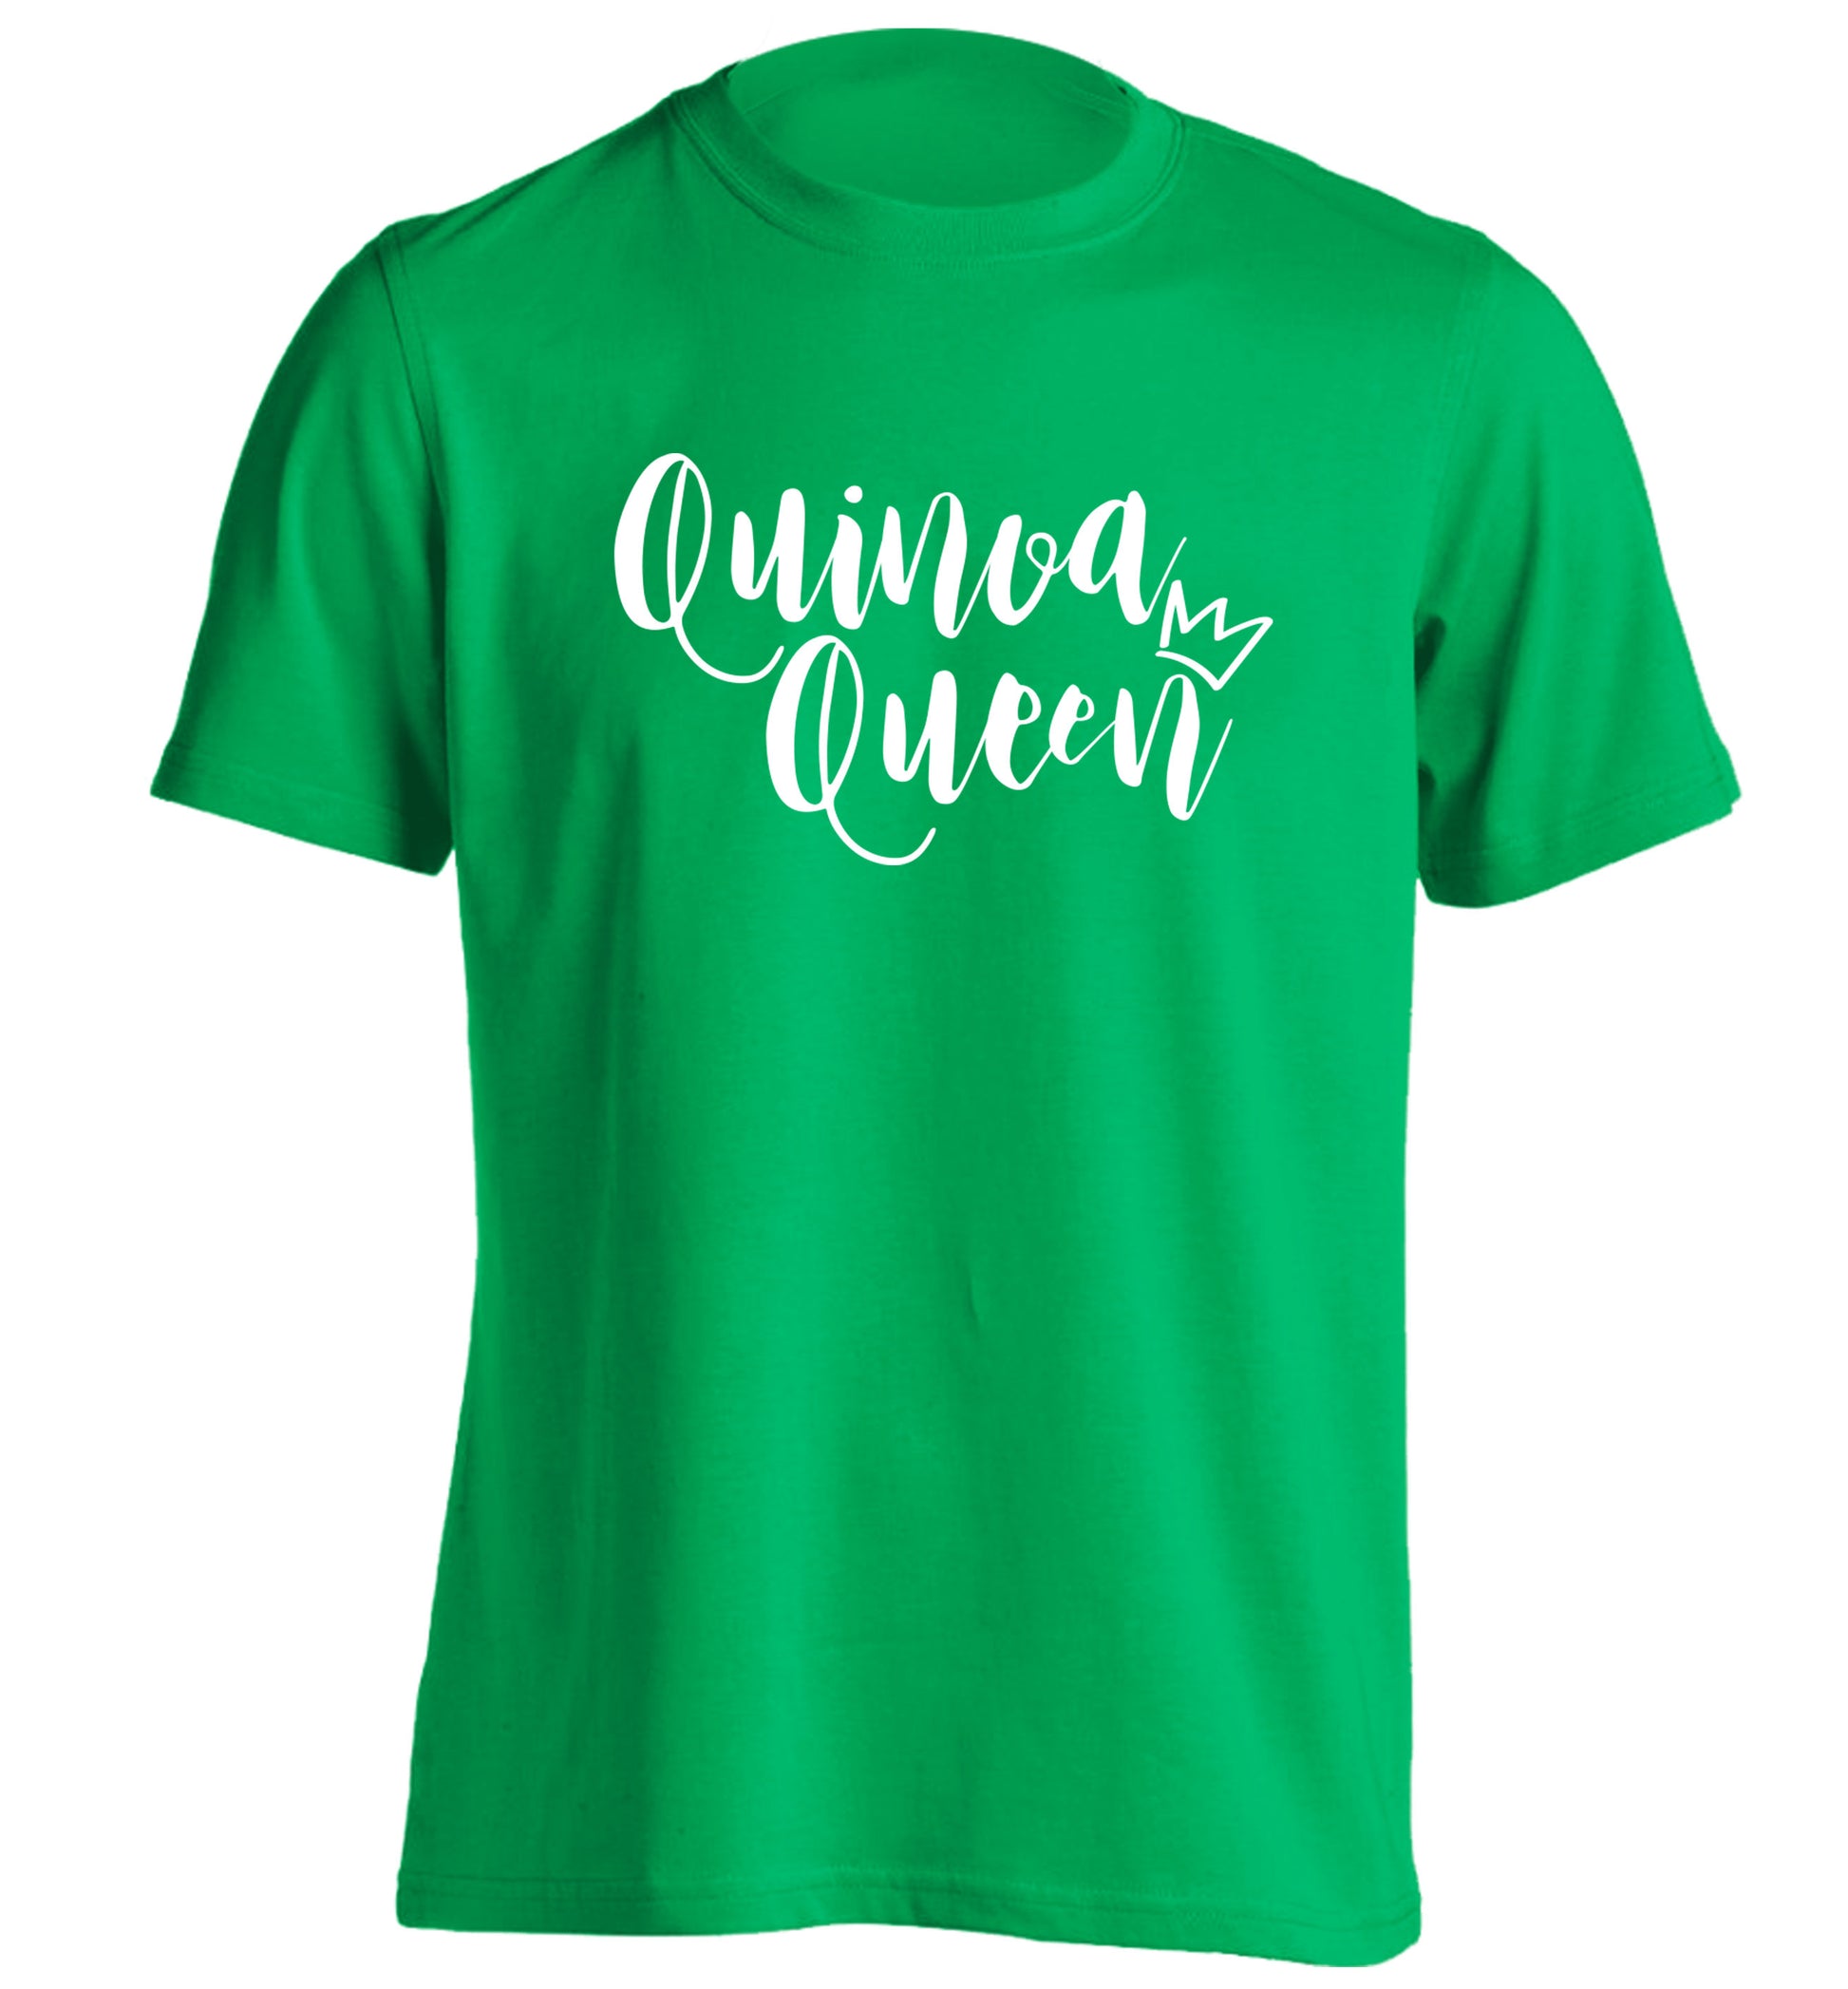 Quinoa Queen adults unisex green Tshirt 2XL